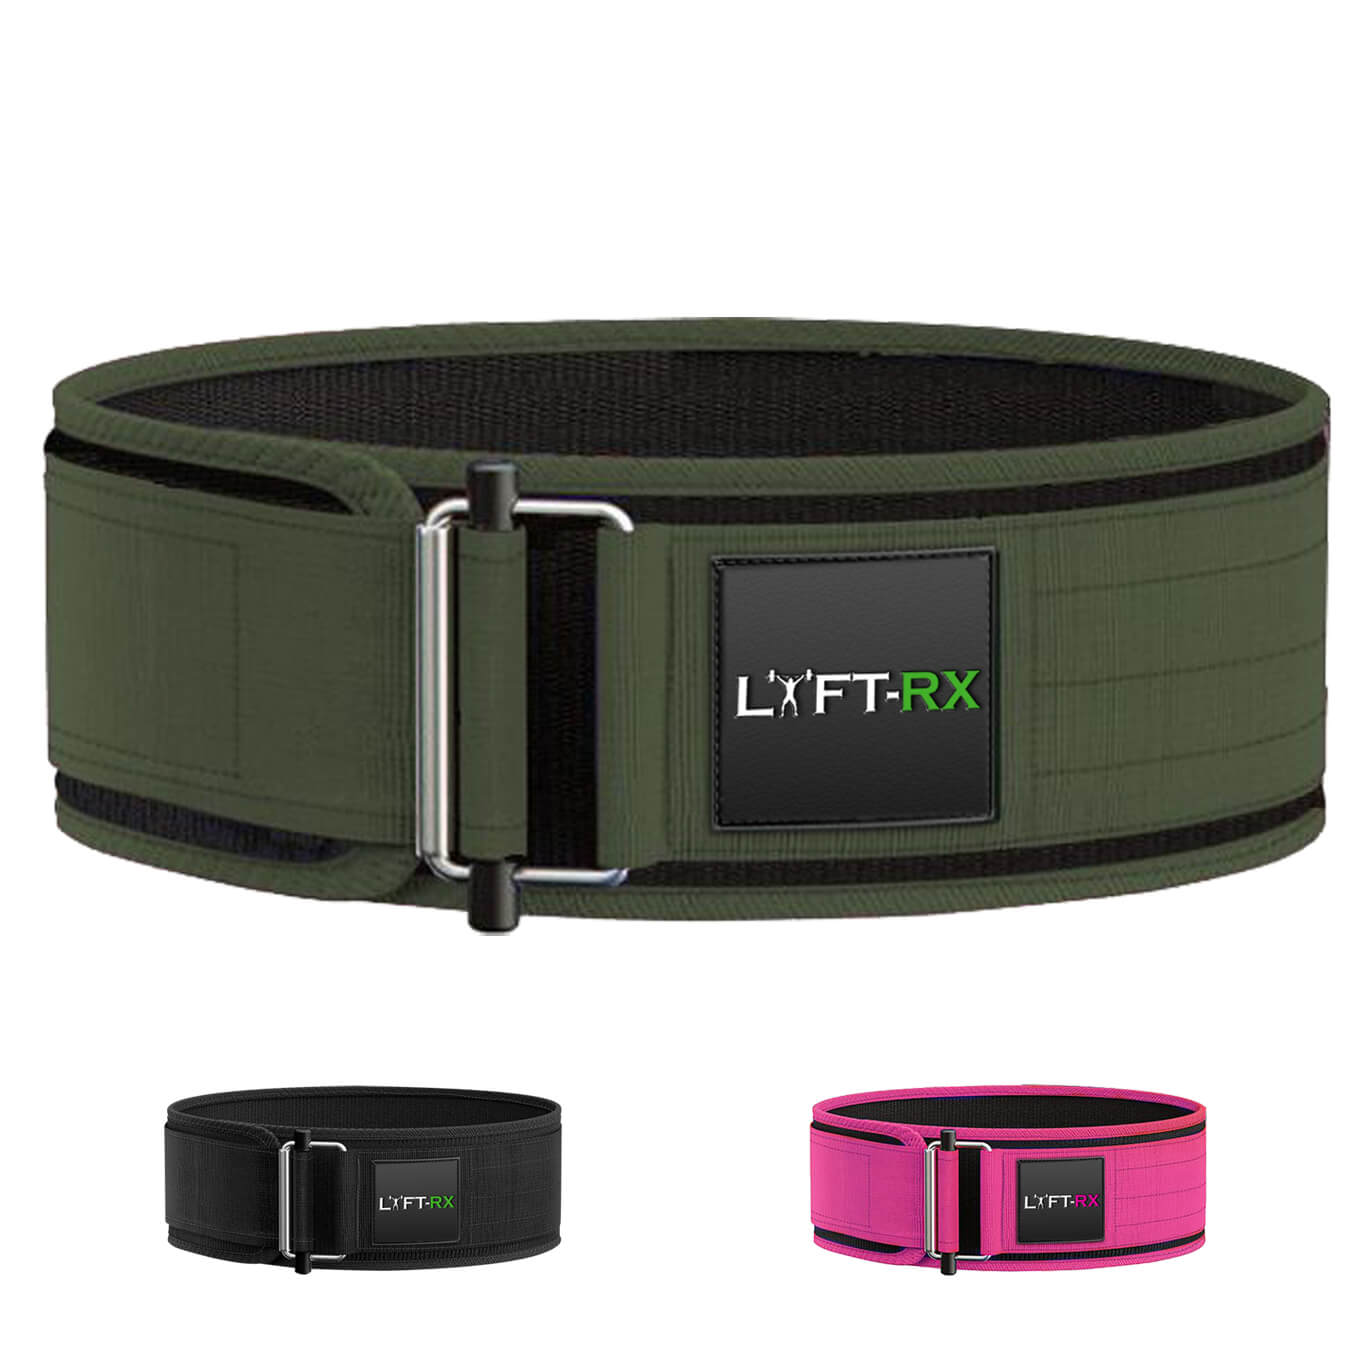 LYFT-RX Quick Locking Weightlifting Belt - OD Green